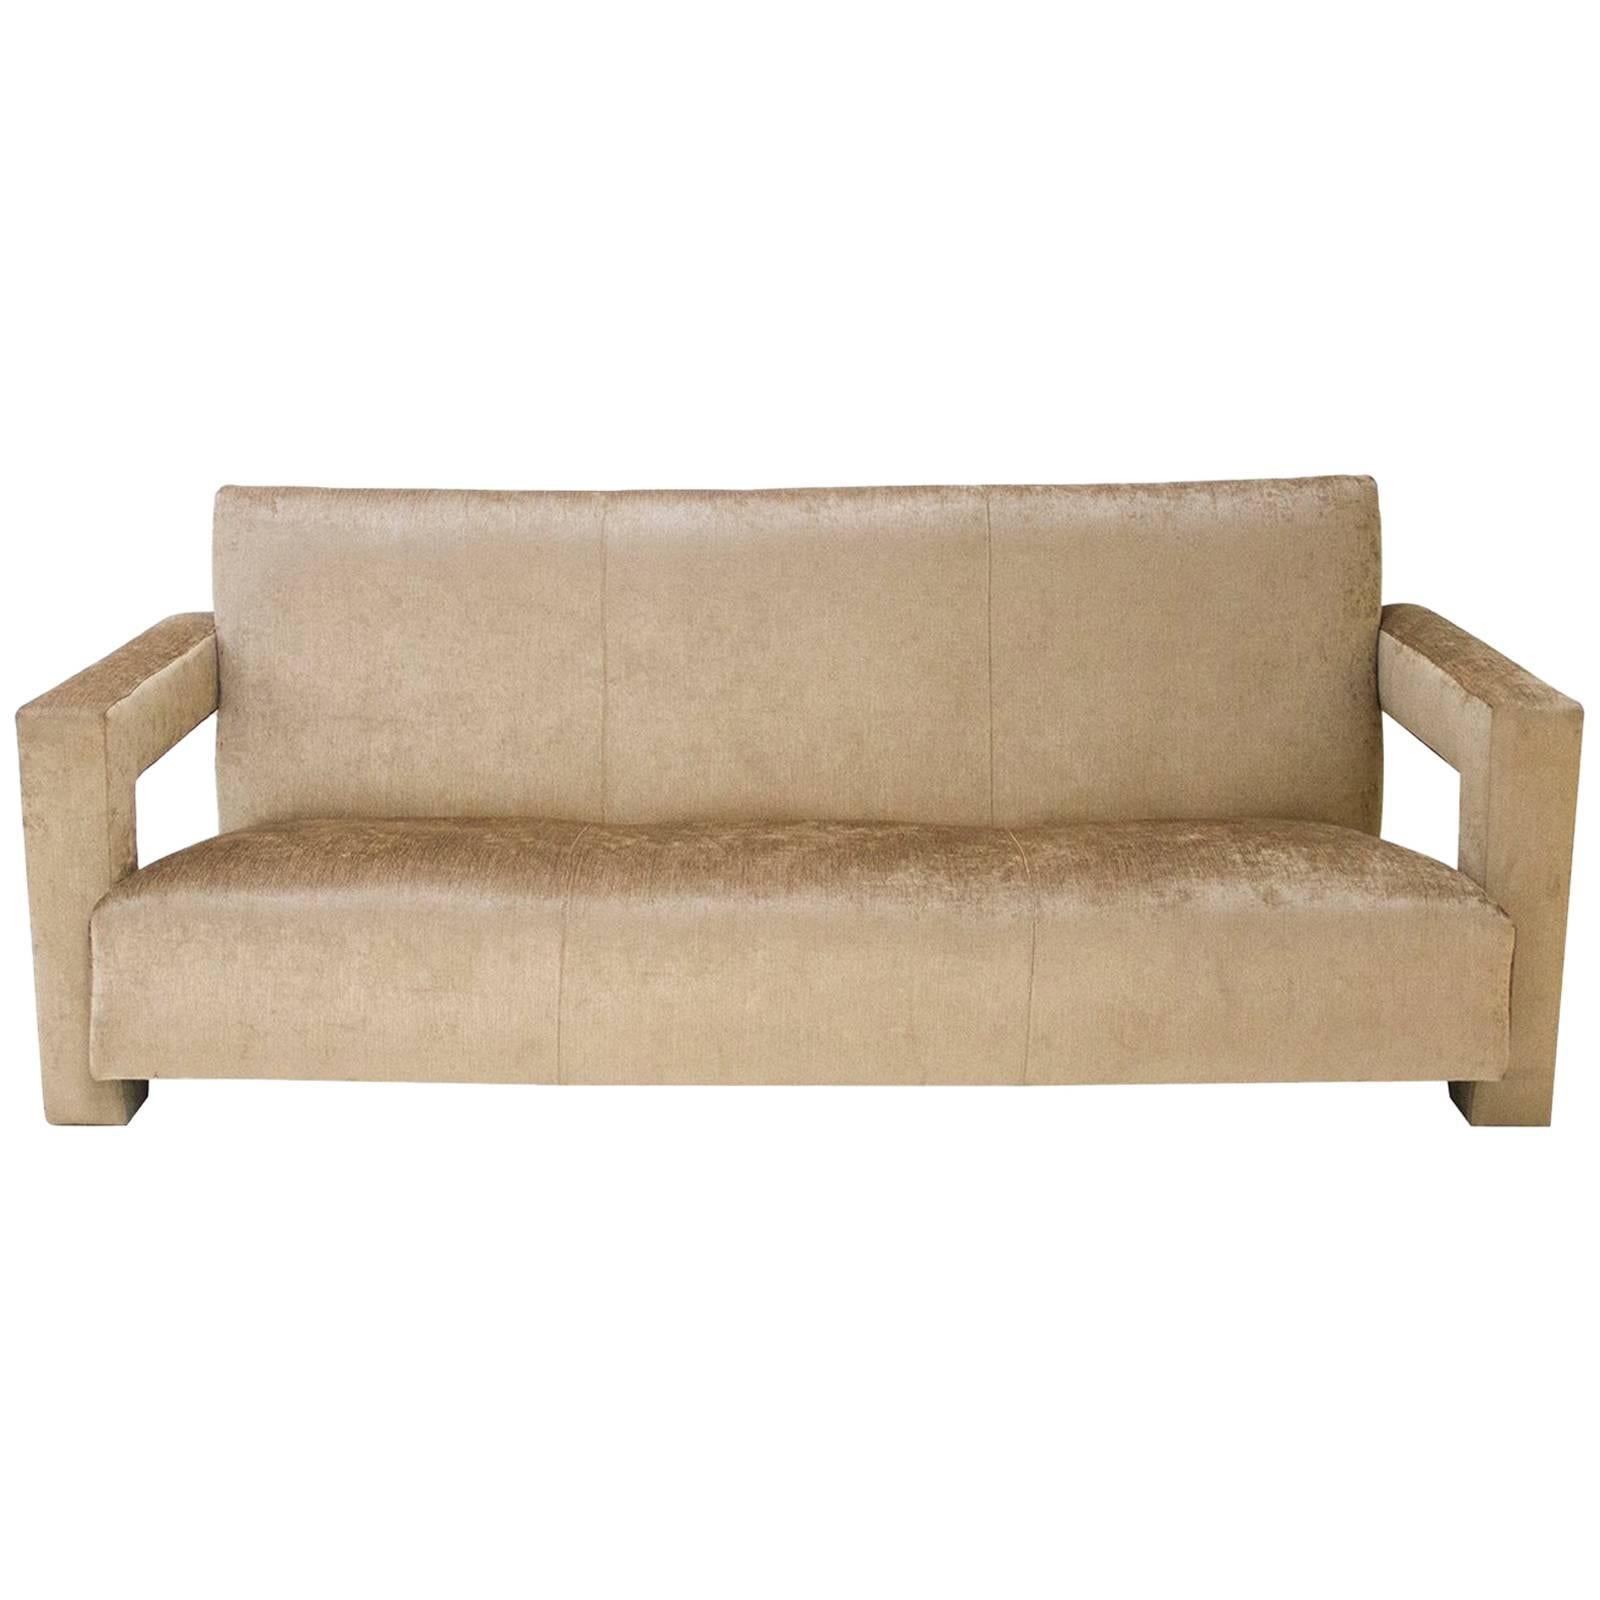 Original Utrecht Sofa Designed by Gerrit Rietveld, circa 1940, Netherlands